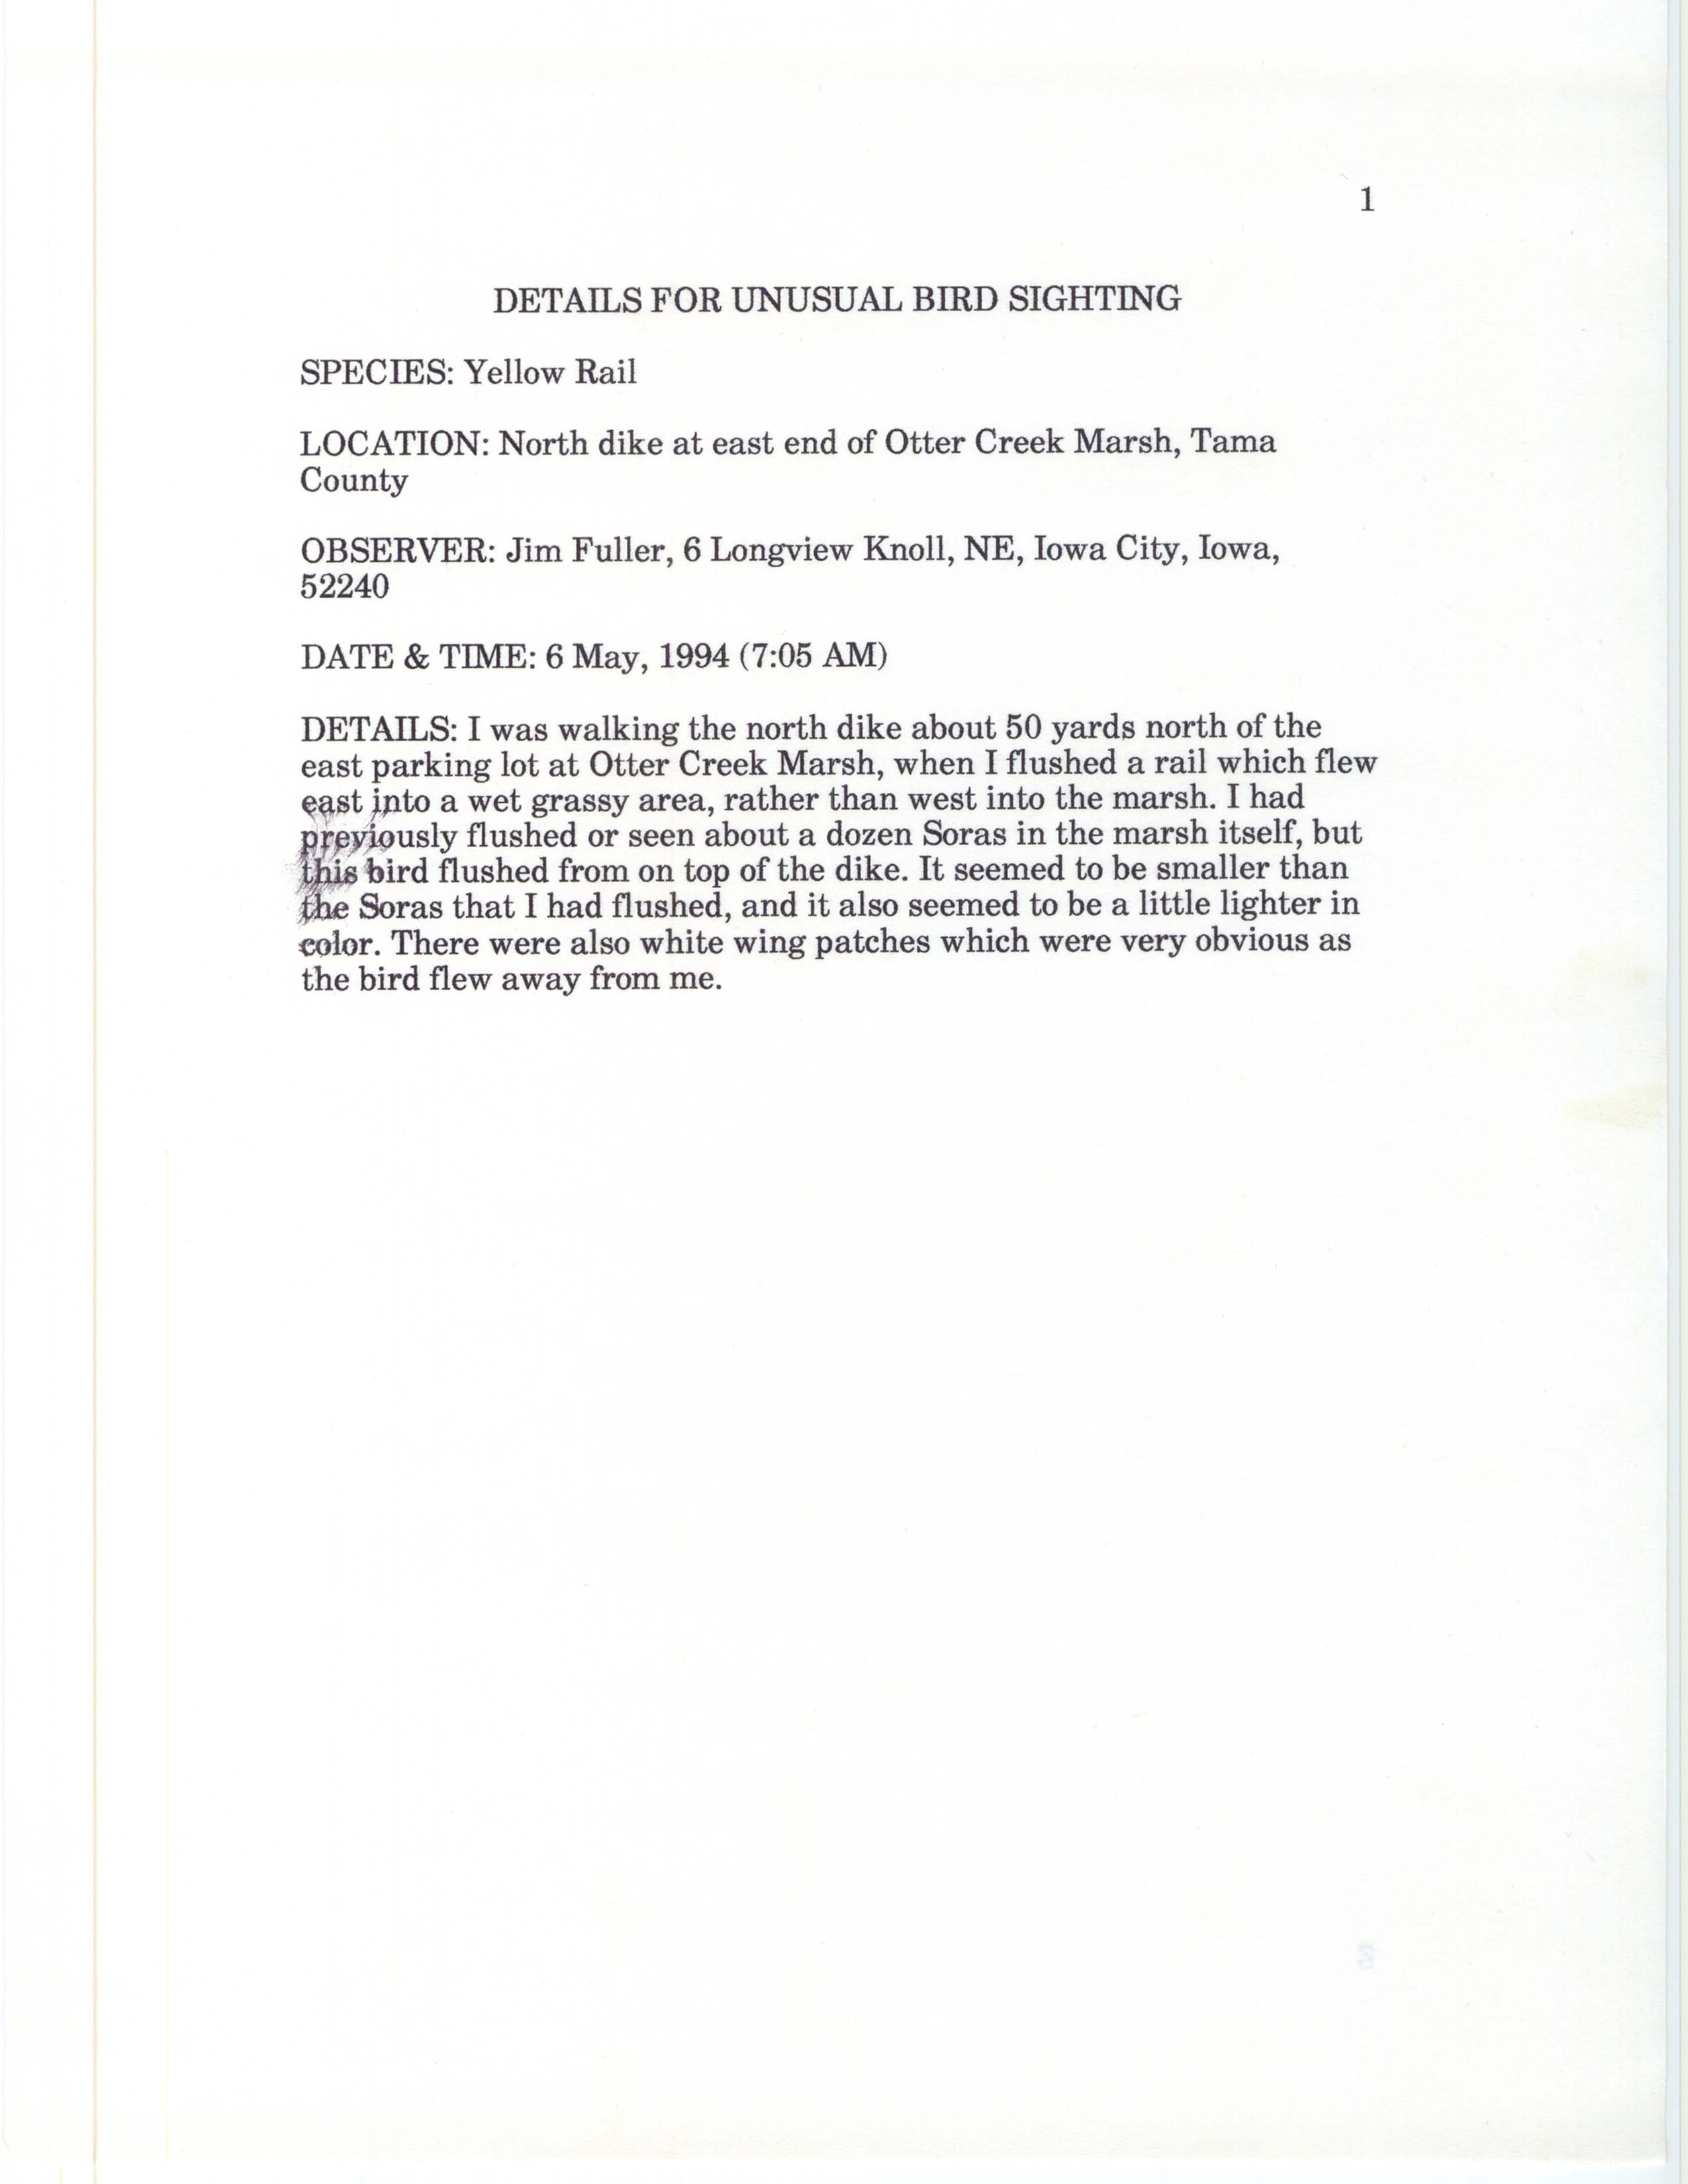 Rare bird documentation form for Yellow Rail at Otter Creek Marsh in 1994